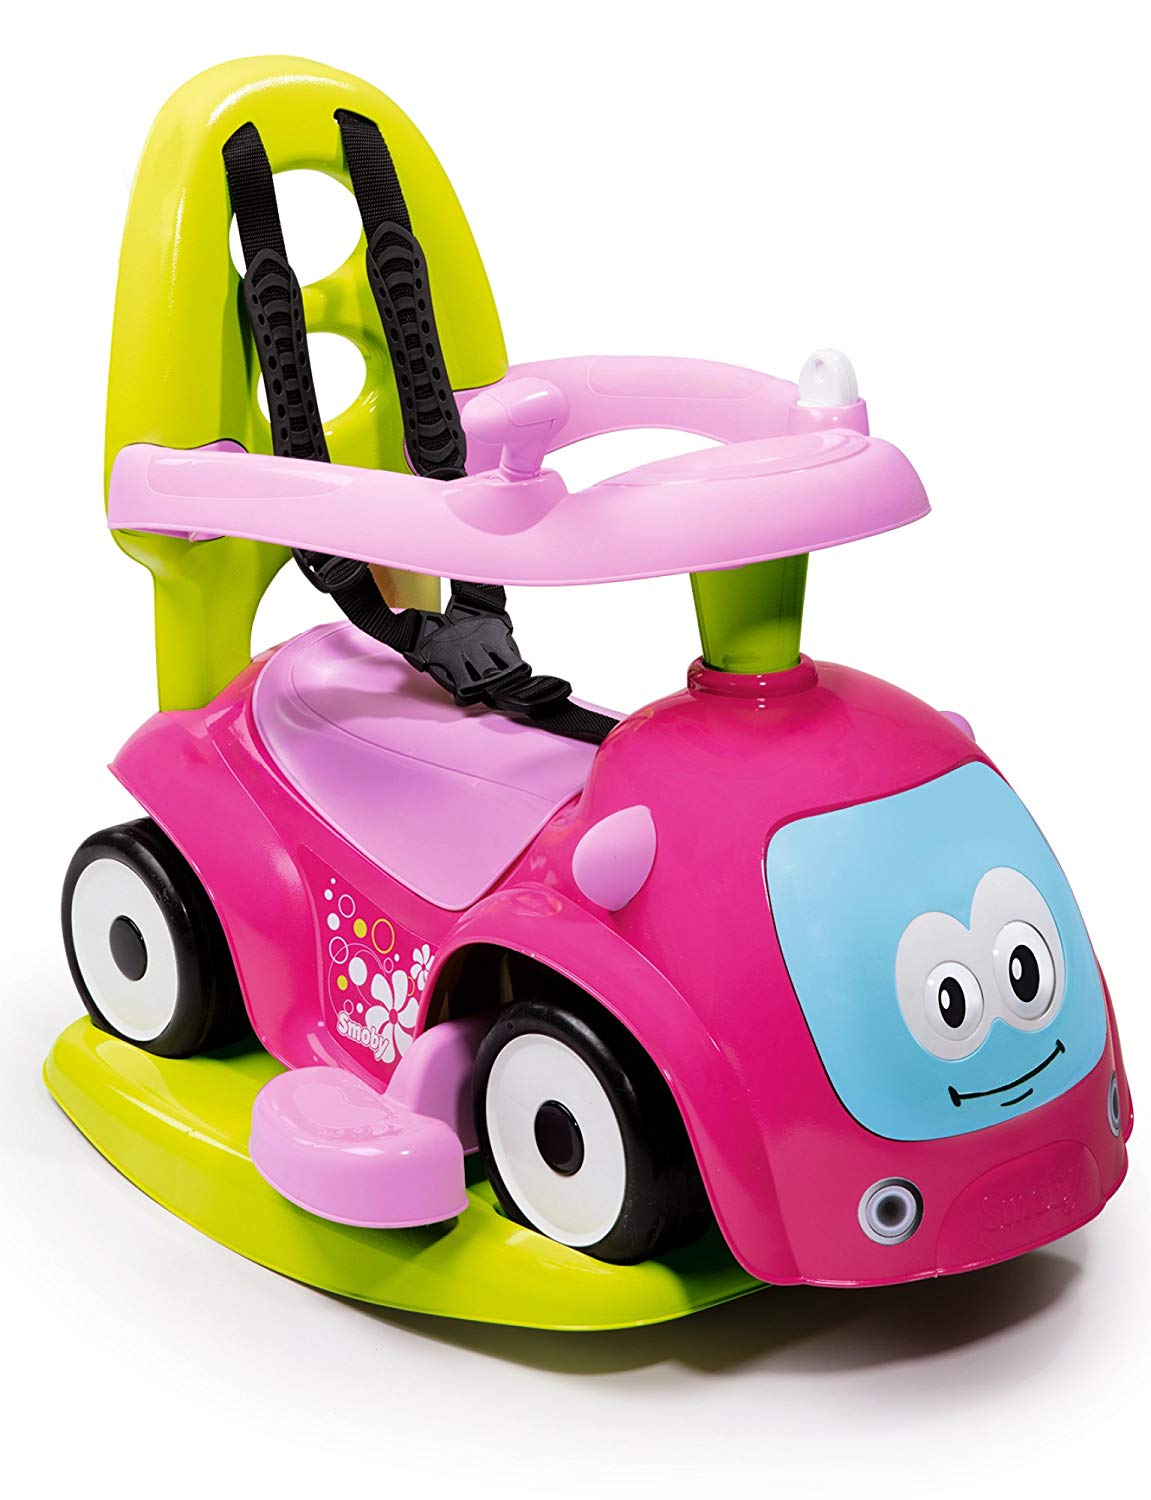 Smoby 720303 - Maestro Balade Childrens Vehicle, Pink